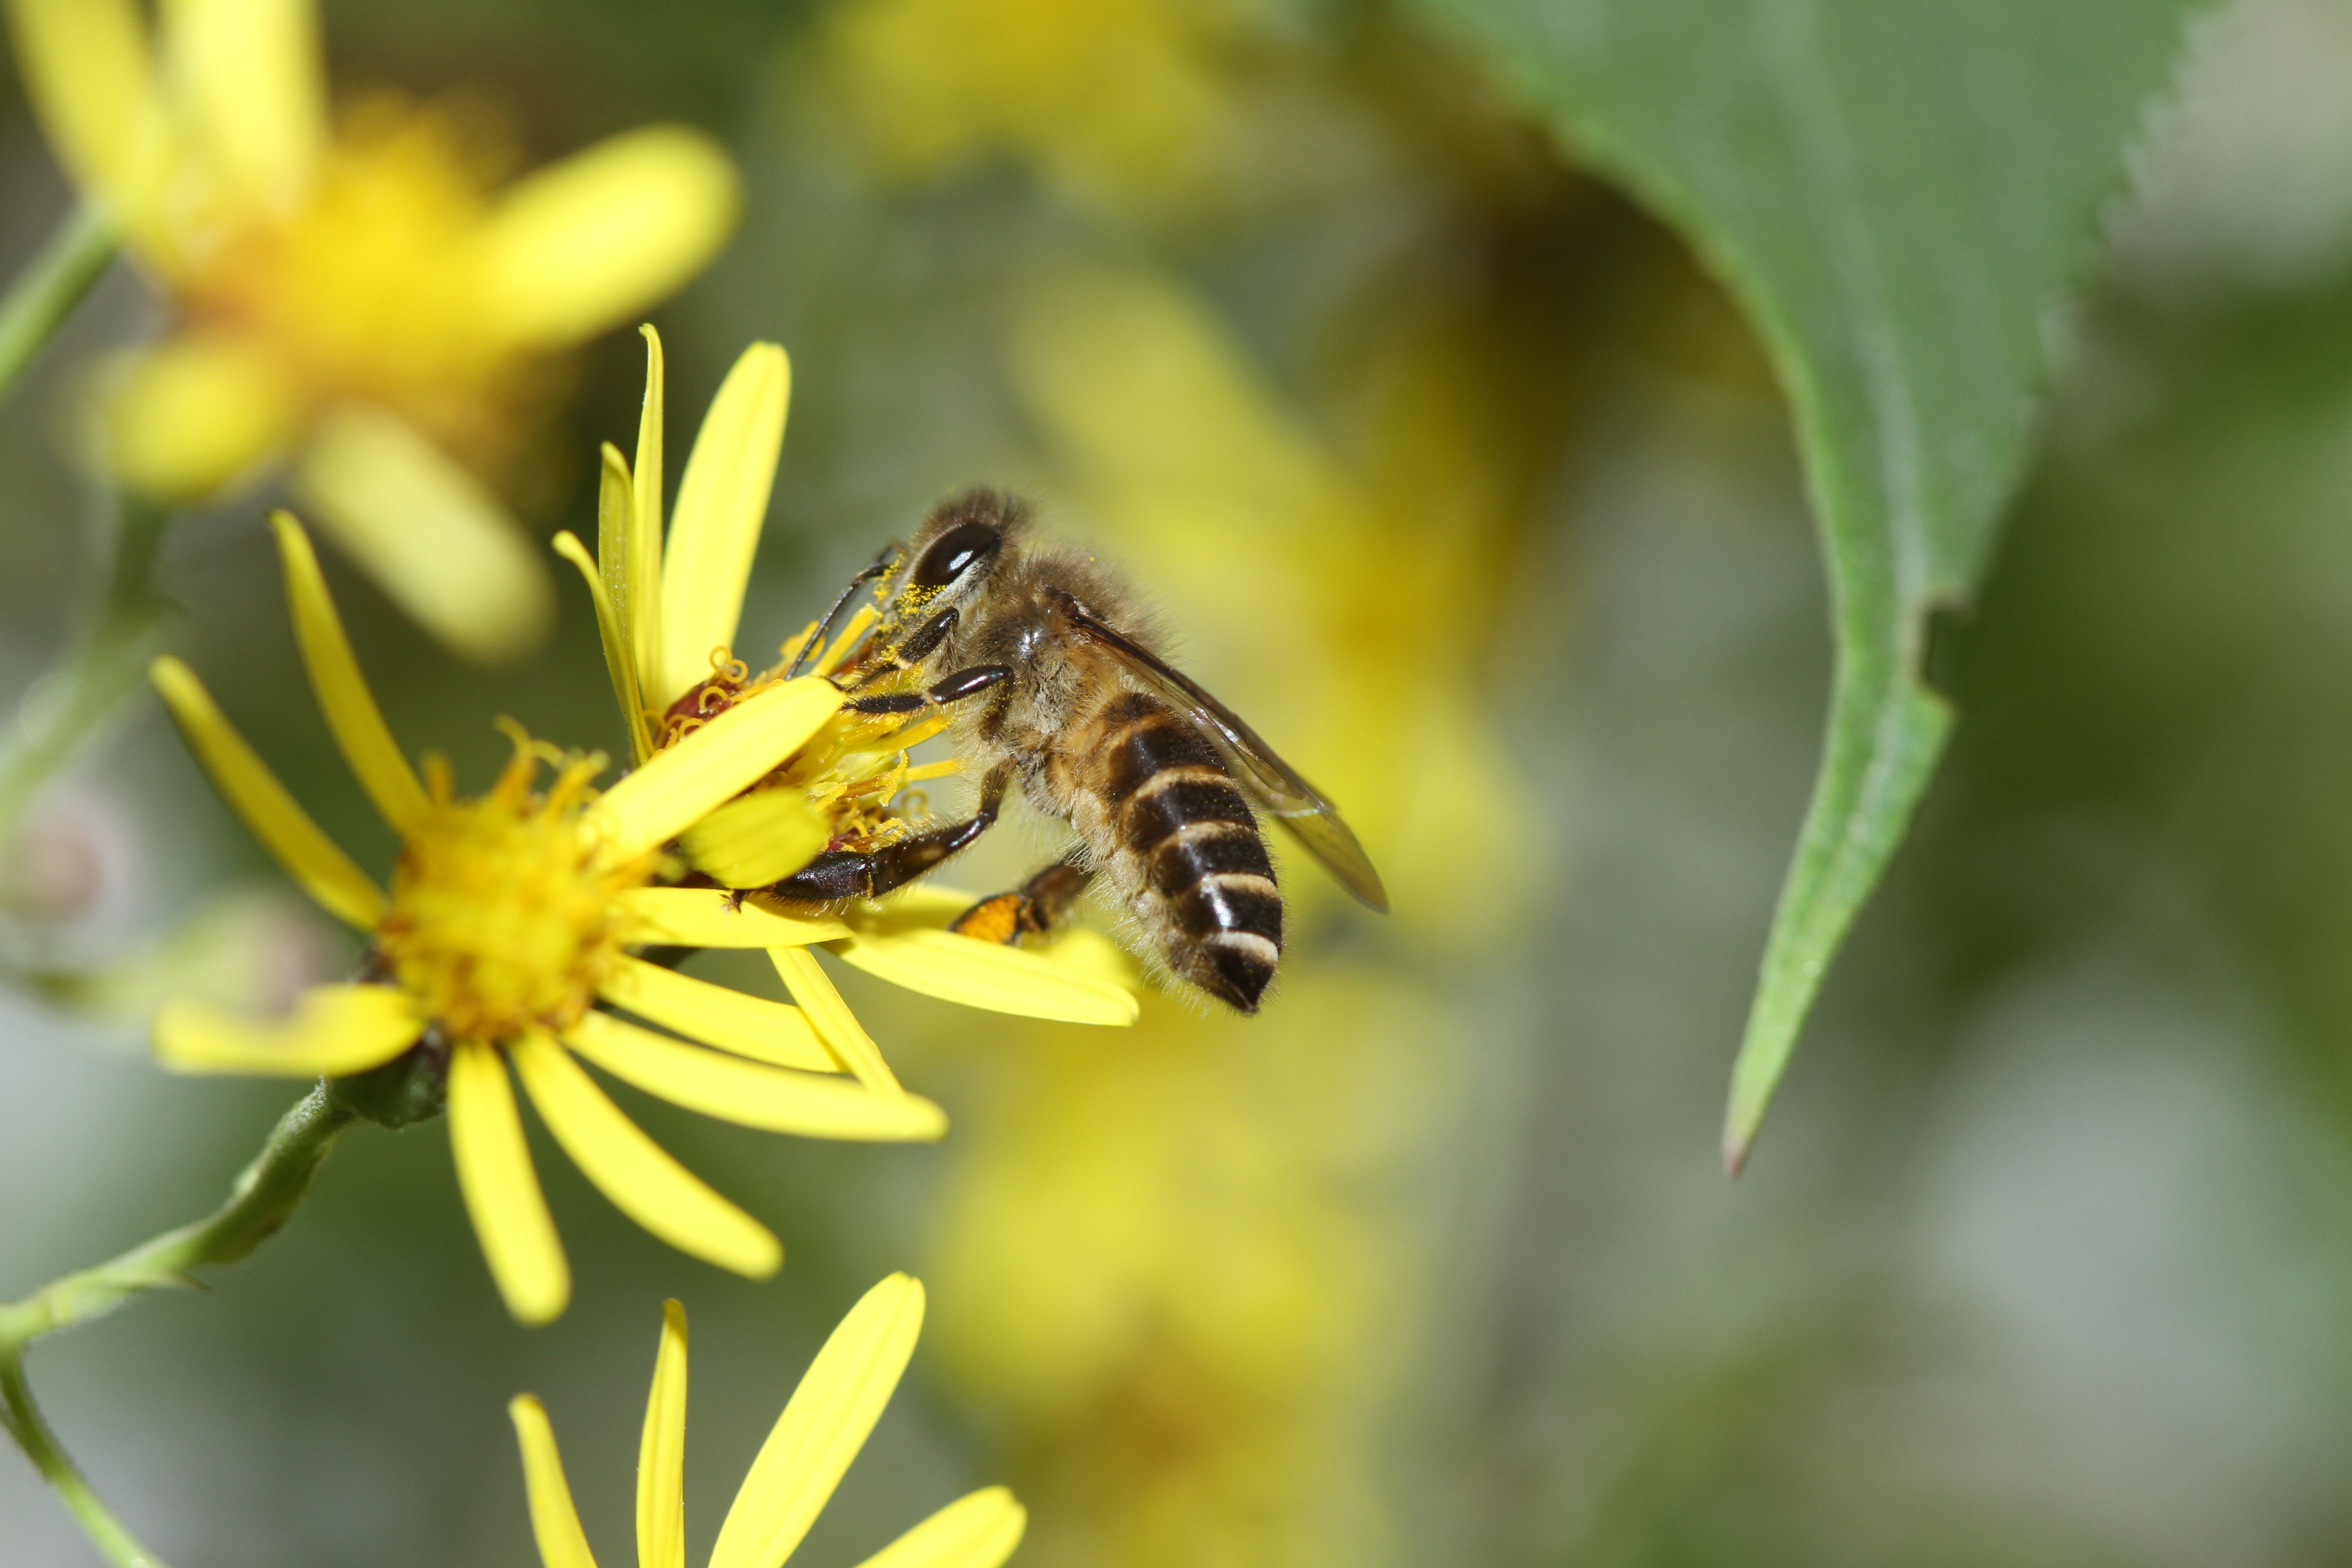 Eastern honey bees